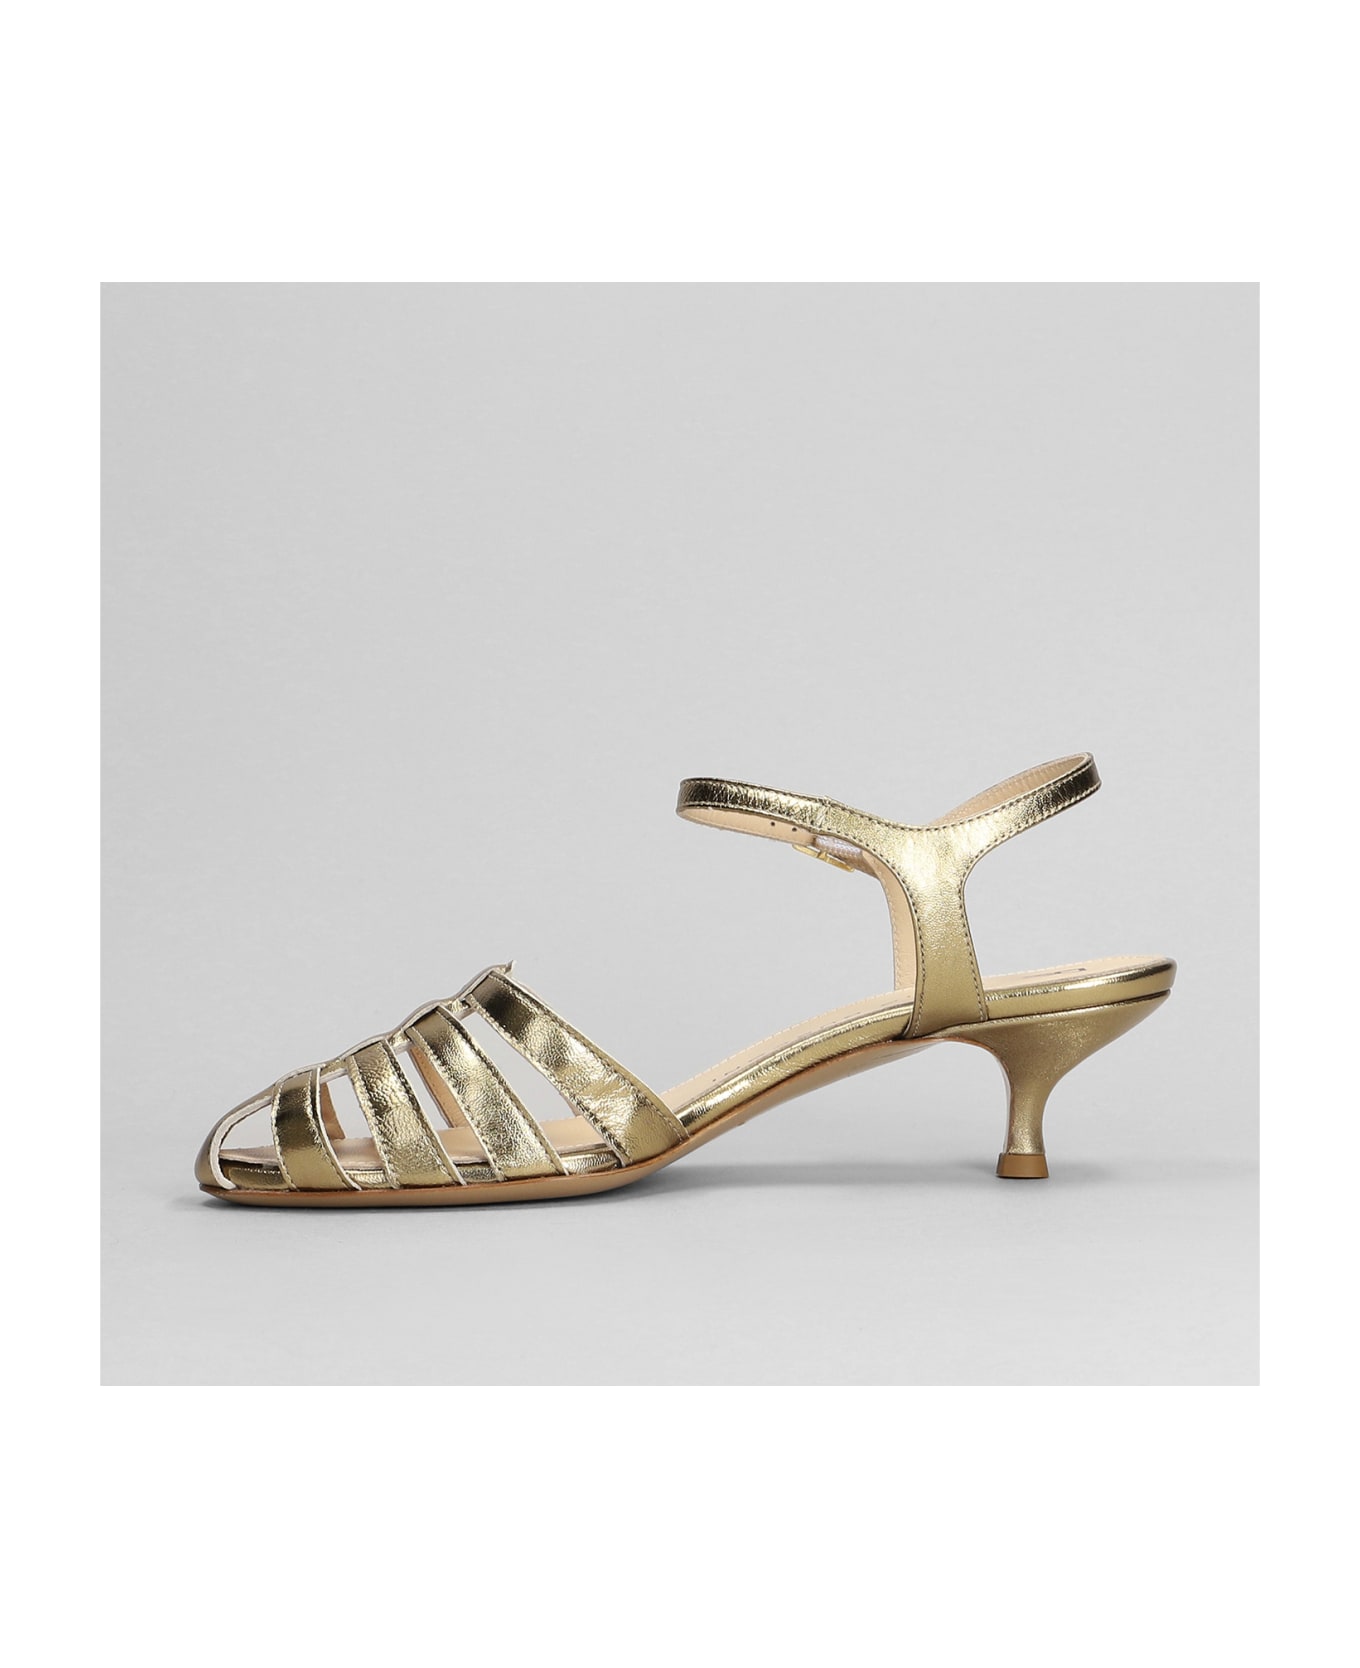 Fabio Rusconi Sandals In Gold Leather - gold